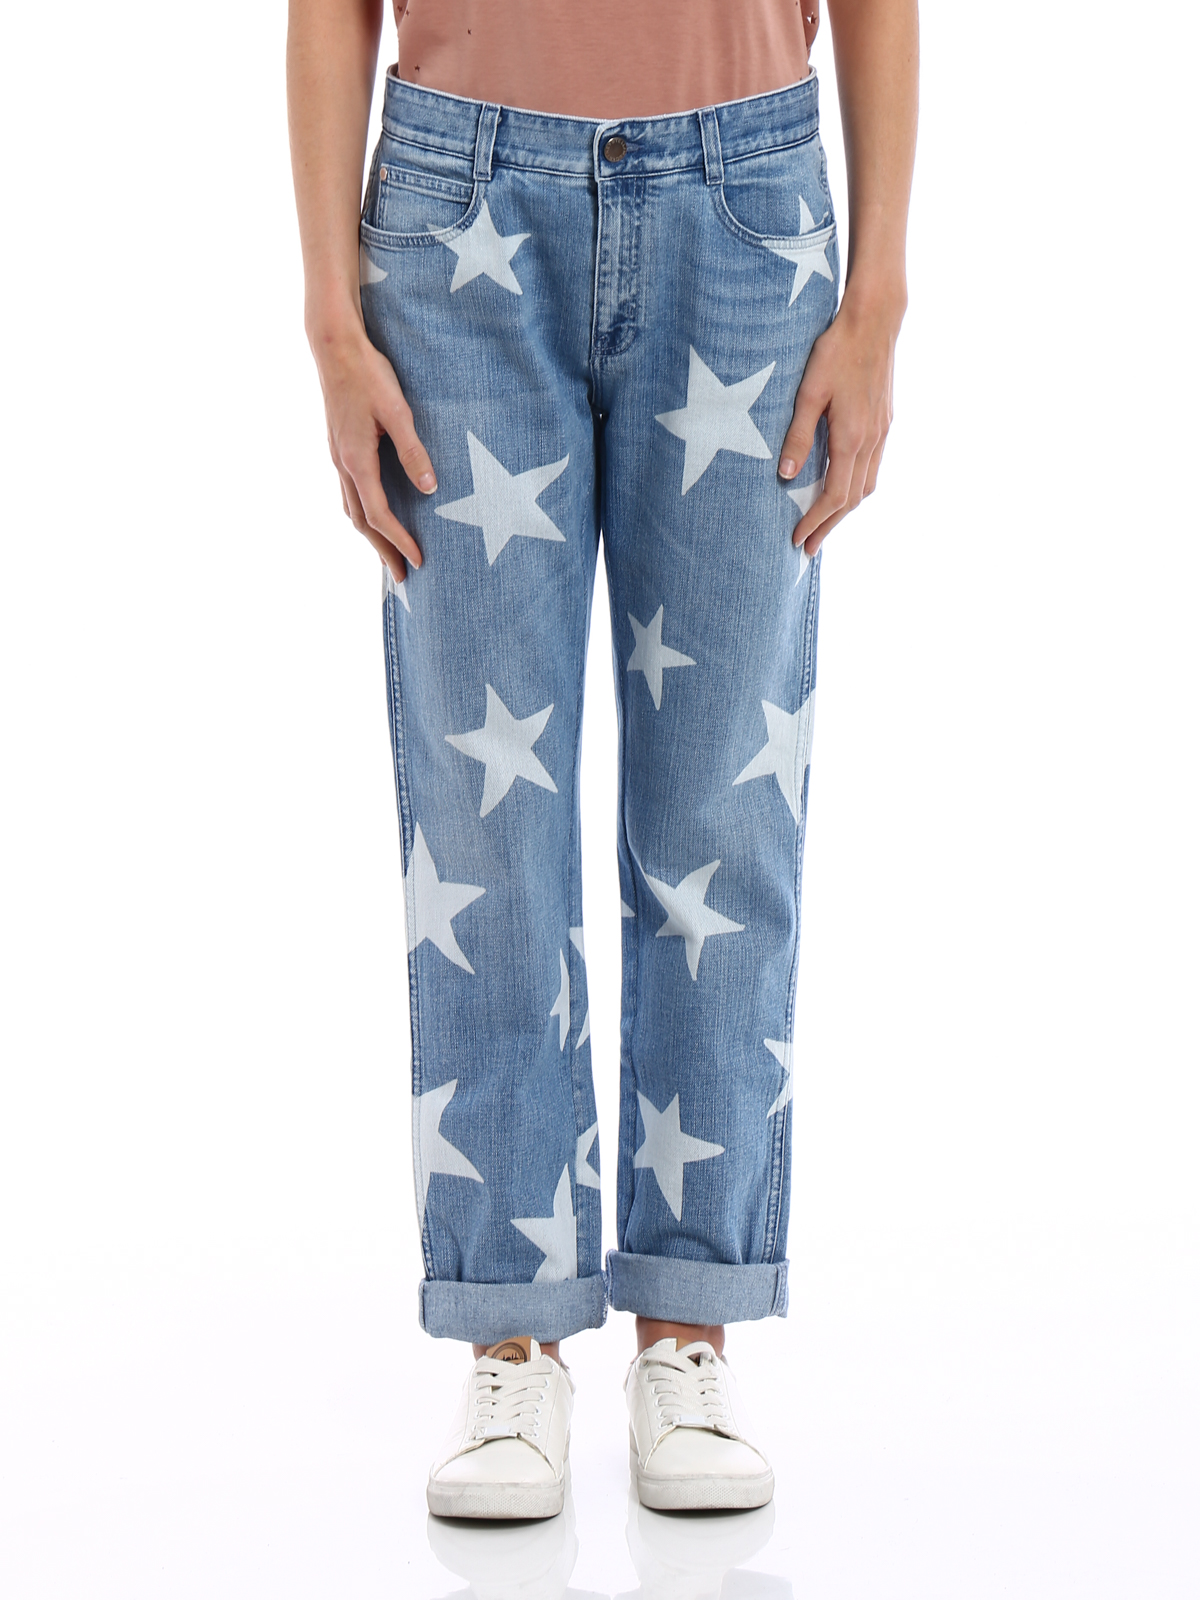 stella mccartney star jeans